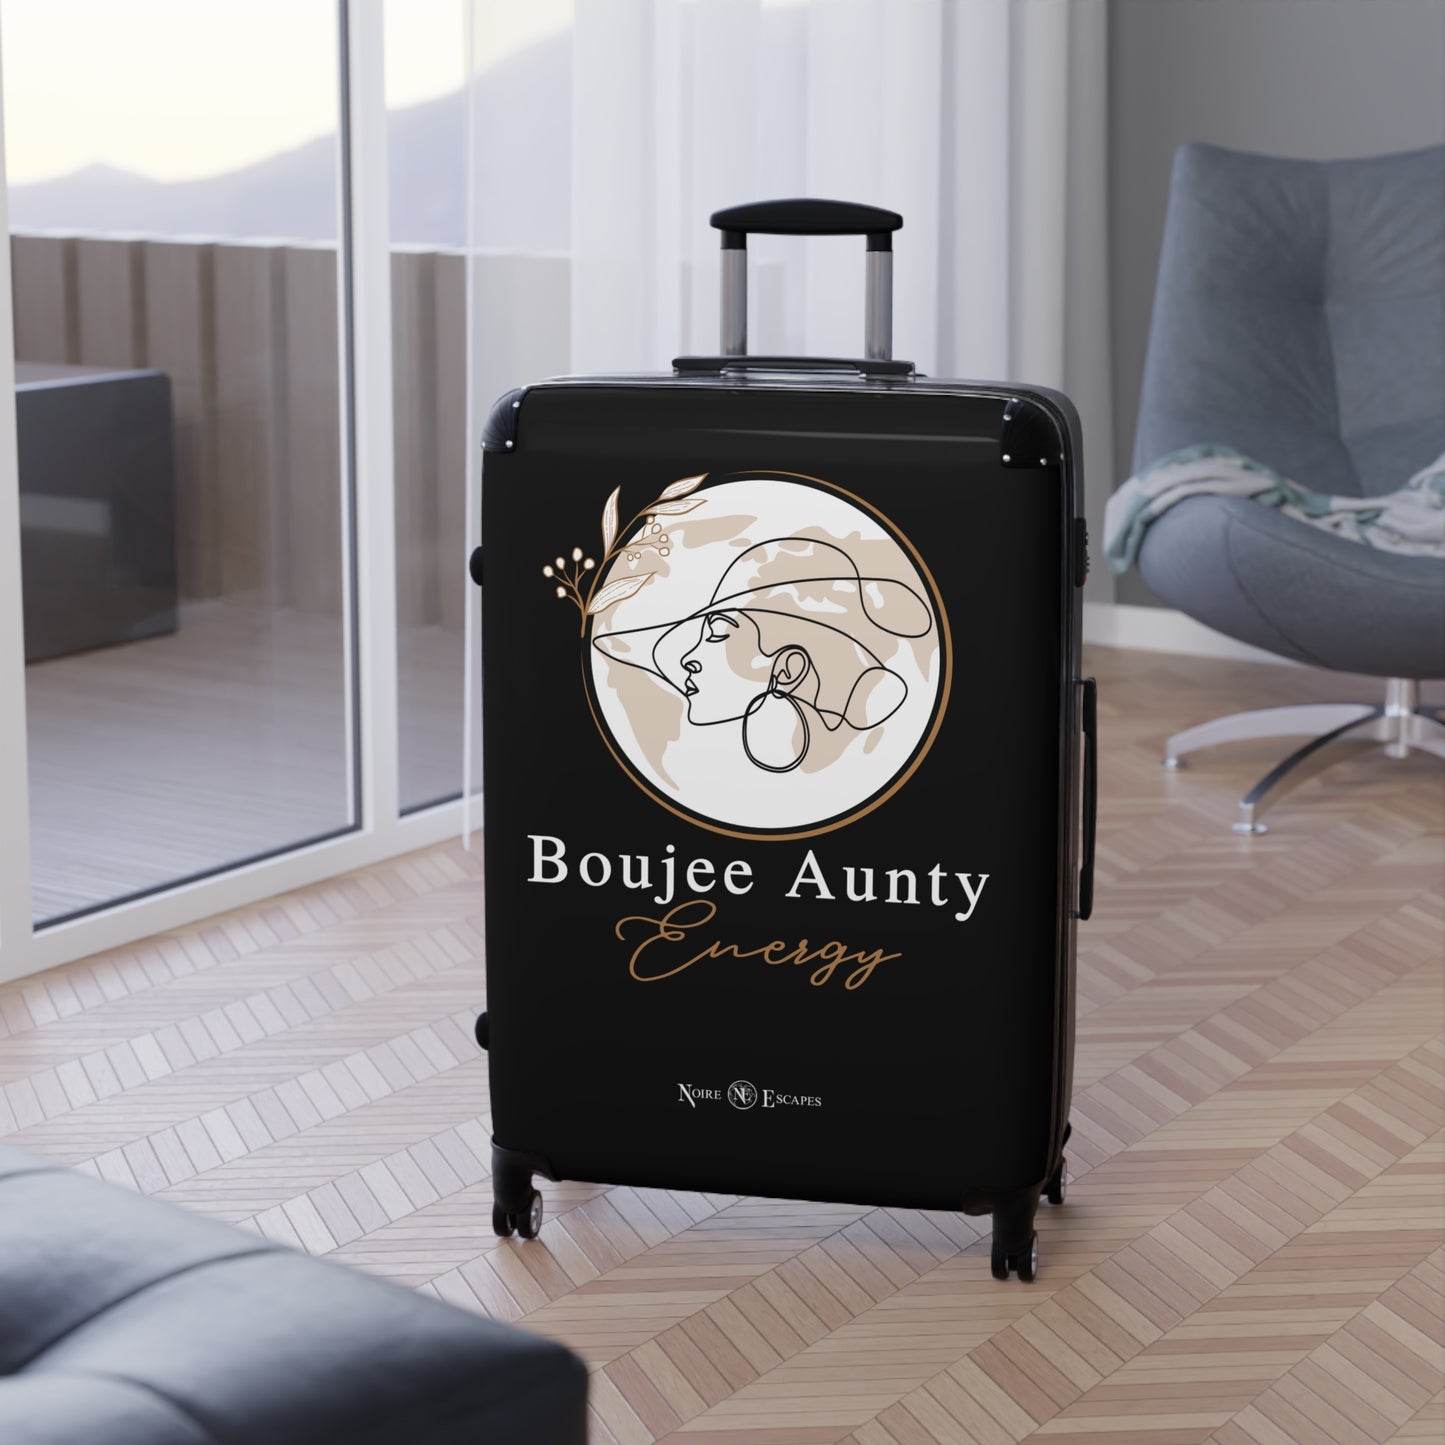 Boujee Aunty Luggage